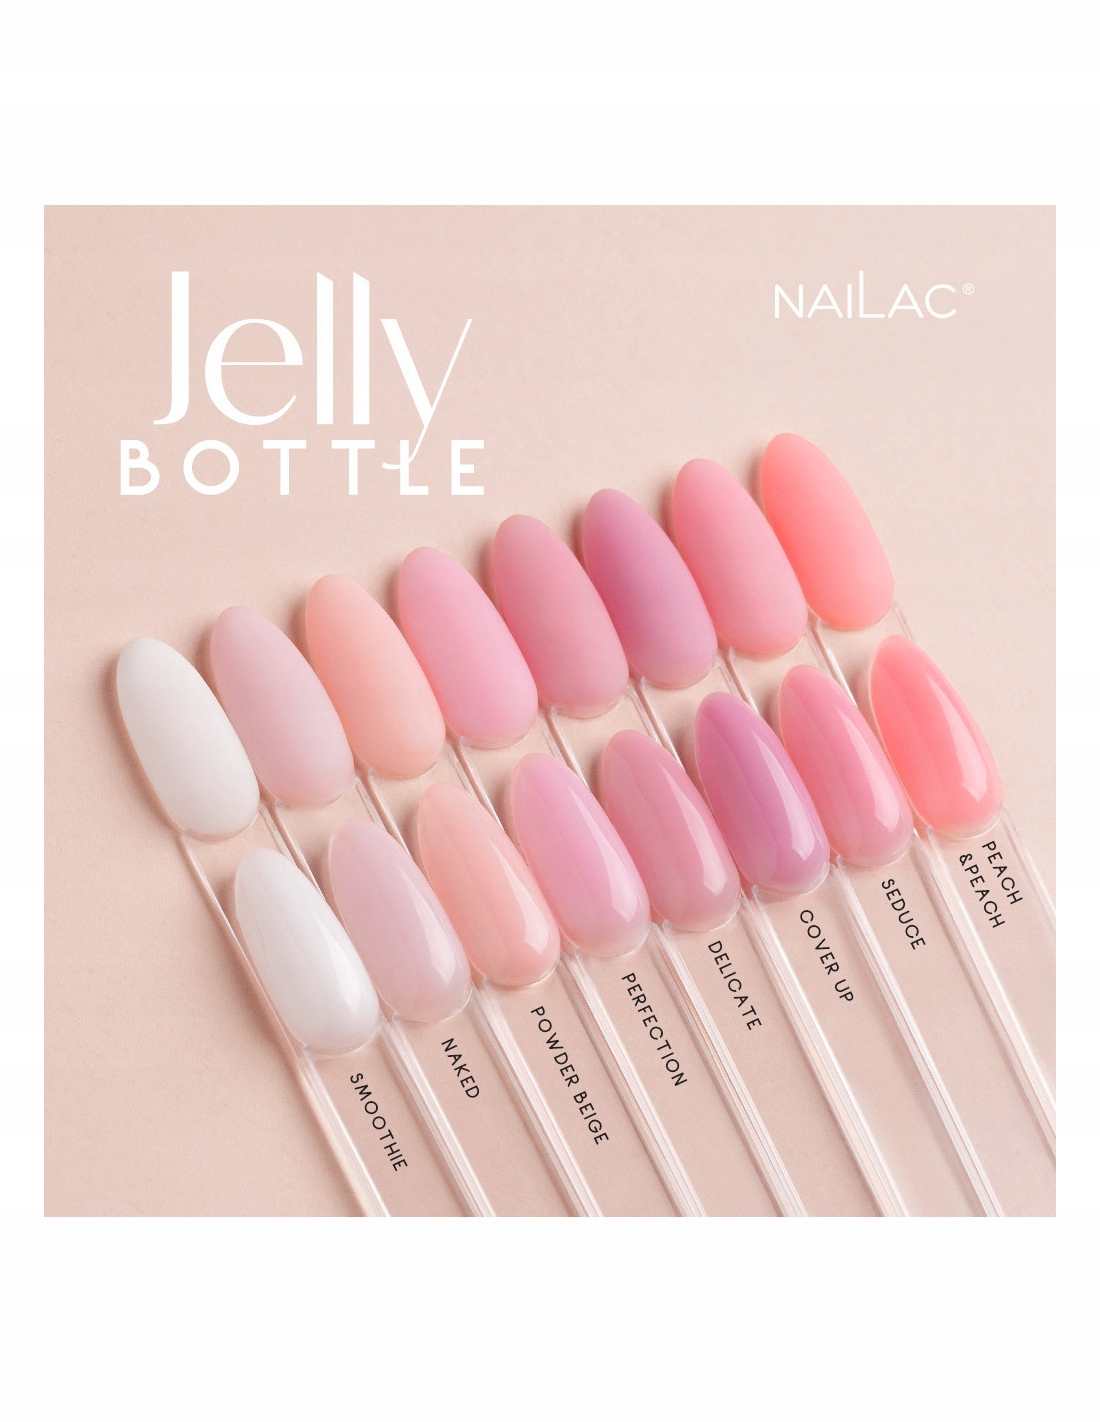 NAILAC Jelly Bottle Smoothie 7ml